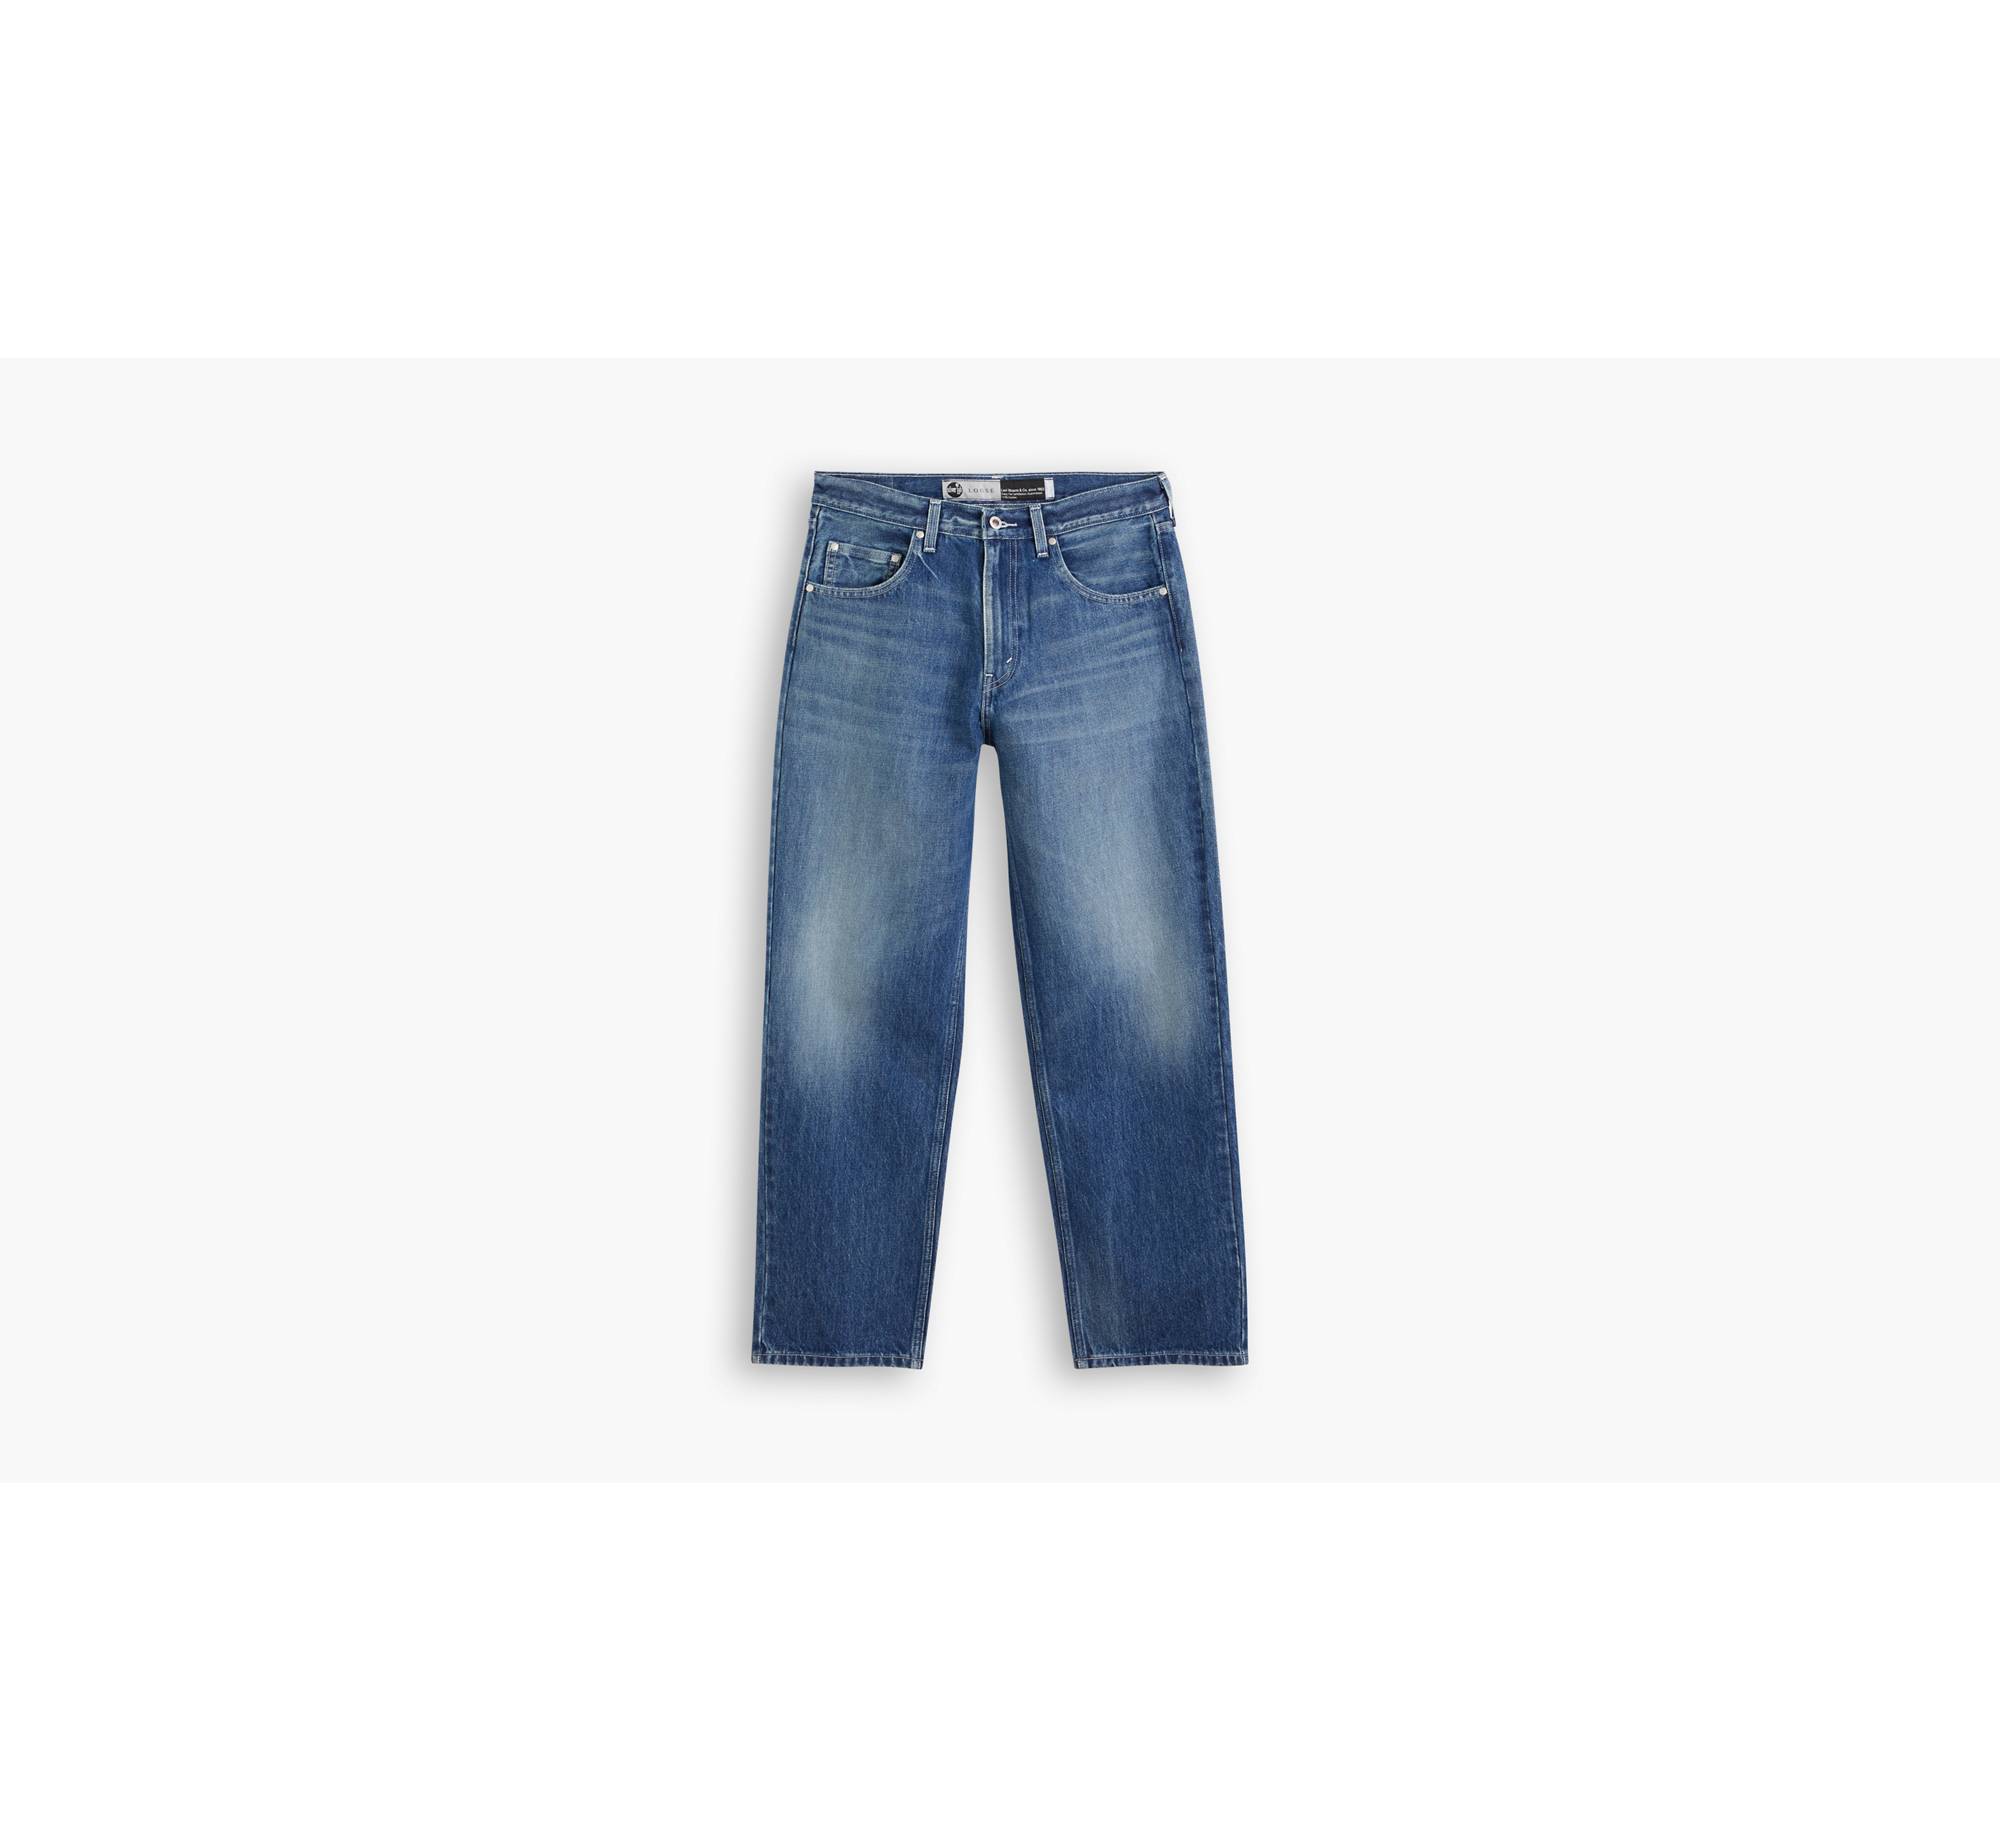 Silvertab™ Loose Men's Jeans - Dark Wash | Levi's® US